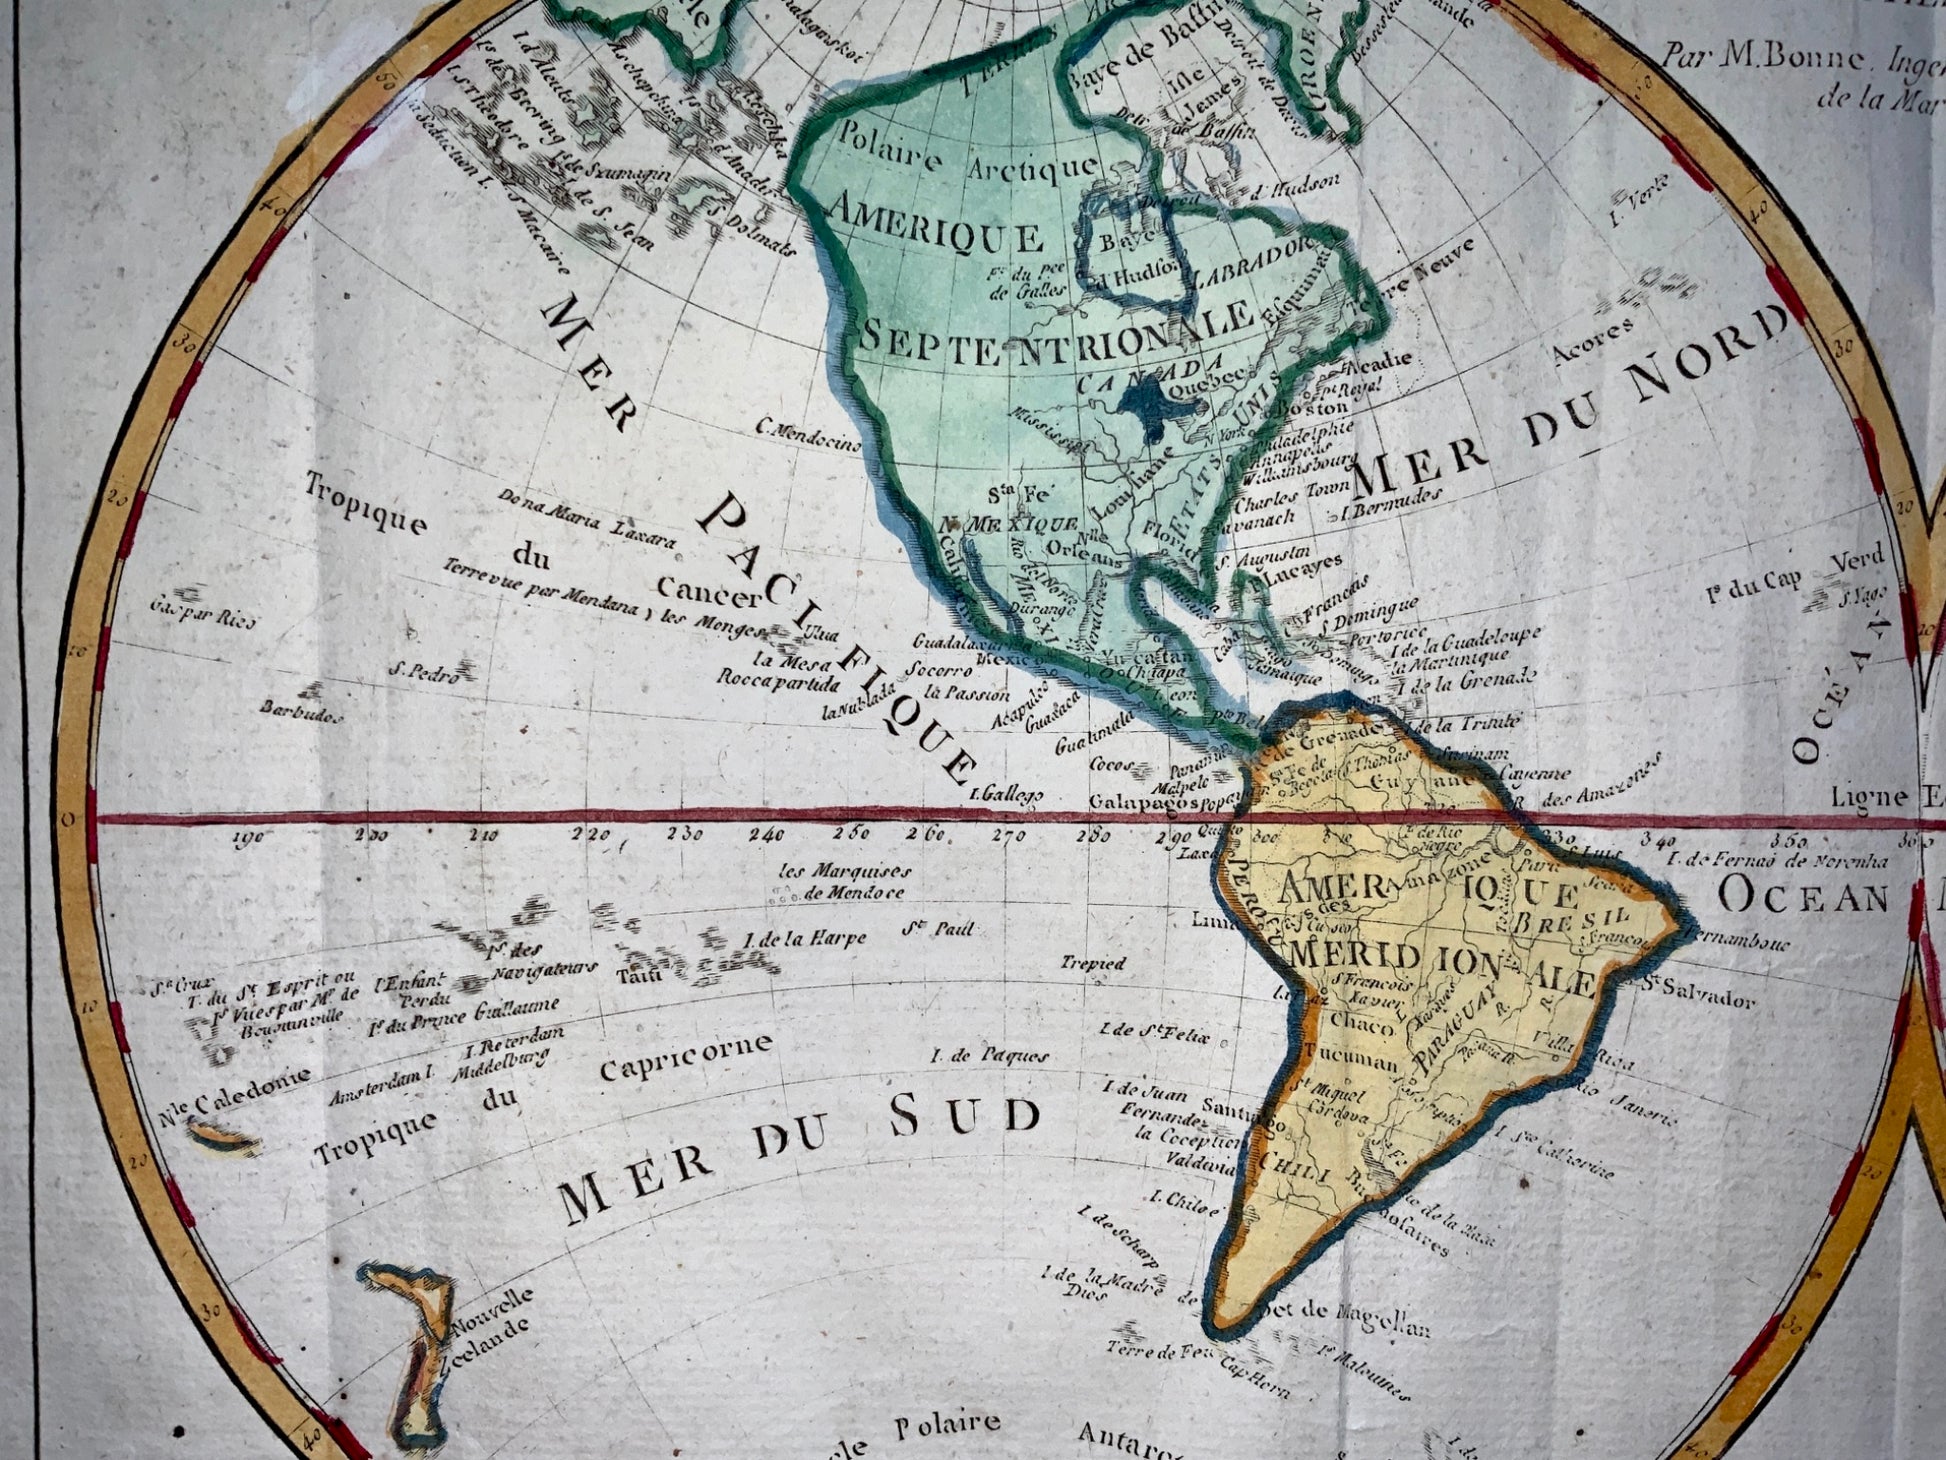 1780 Bonne - DOUBLE HEMISPHERE WORLD MAP - hand coloured engraved map